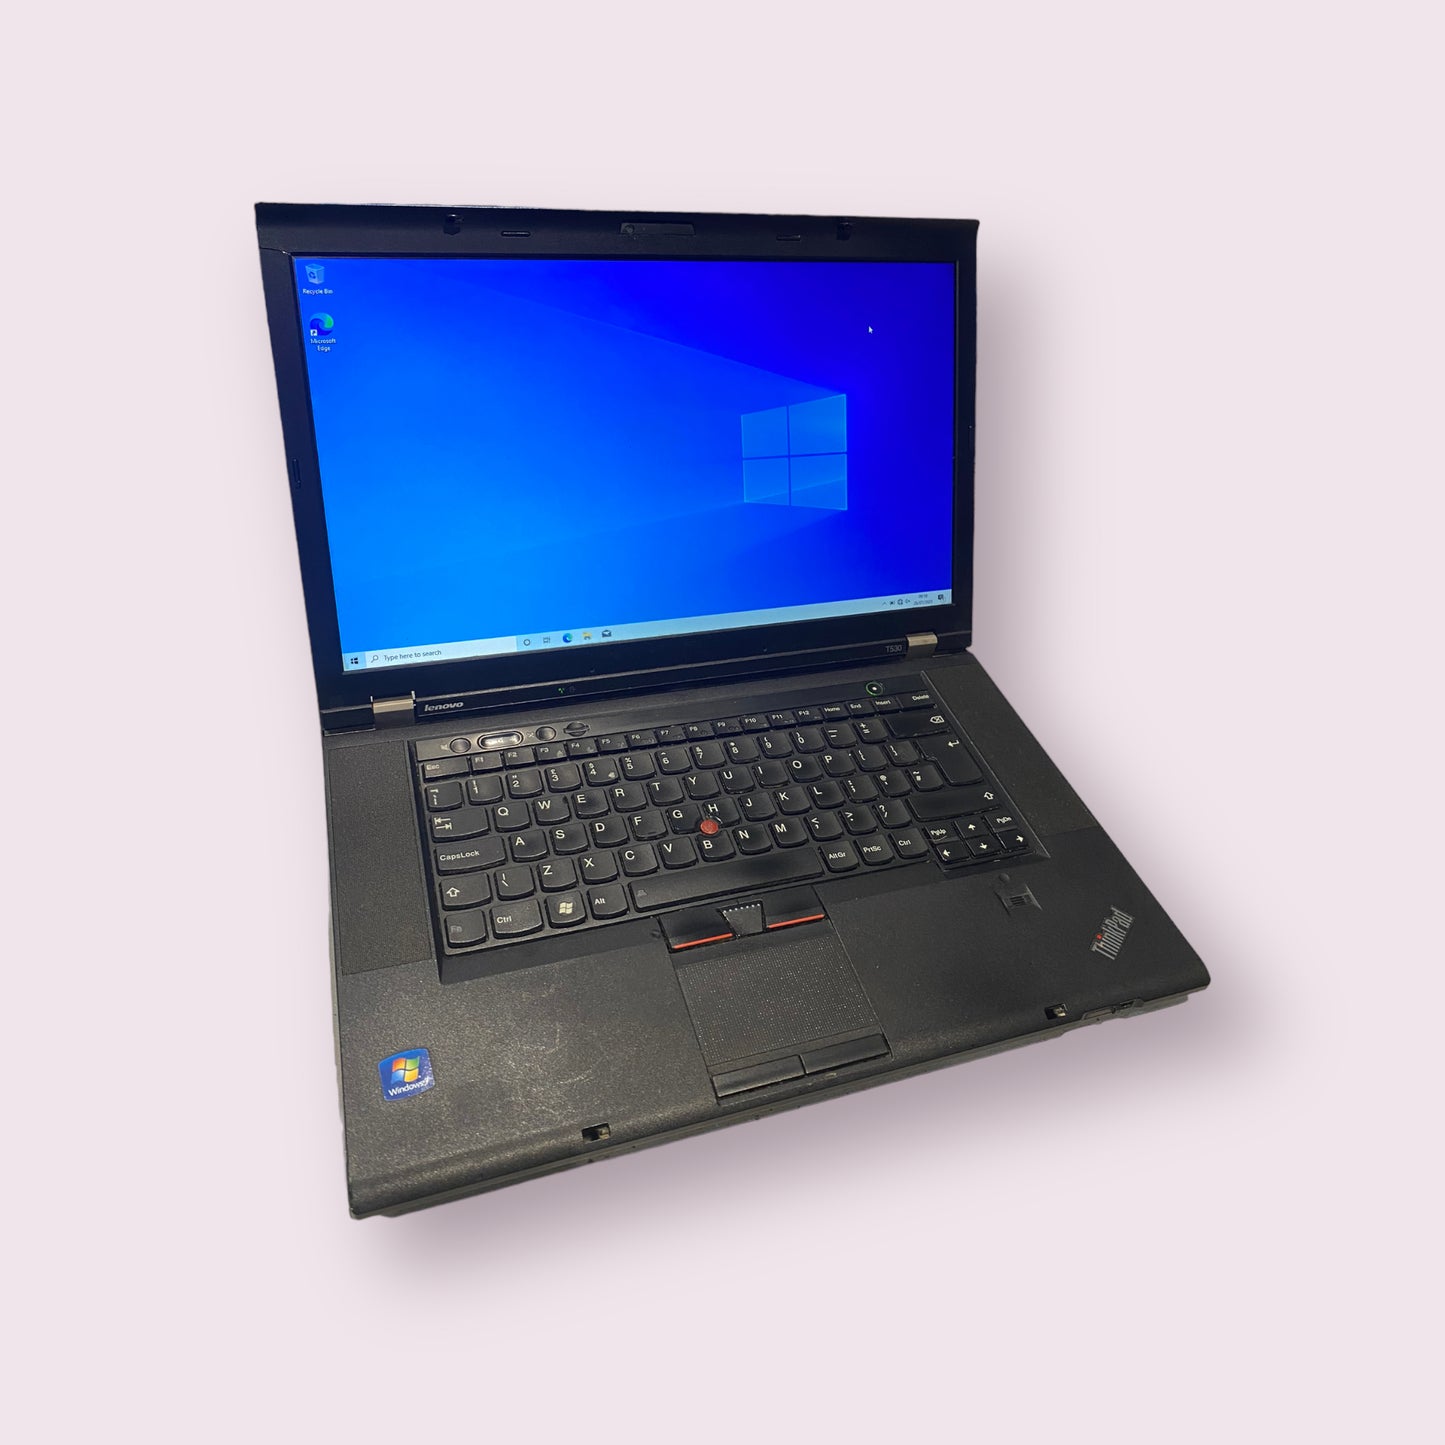 Lenovo Thinkpad T530 Windows 10 Laptop 8GB RAM 240GB SSD Intel Core i5-3320 @ 2.6 GHz